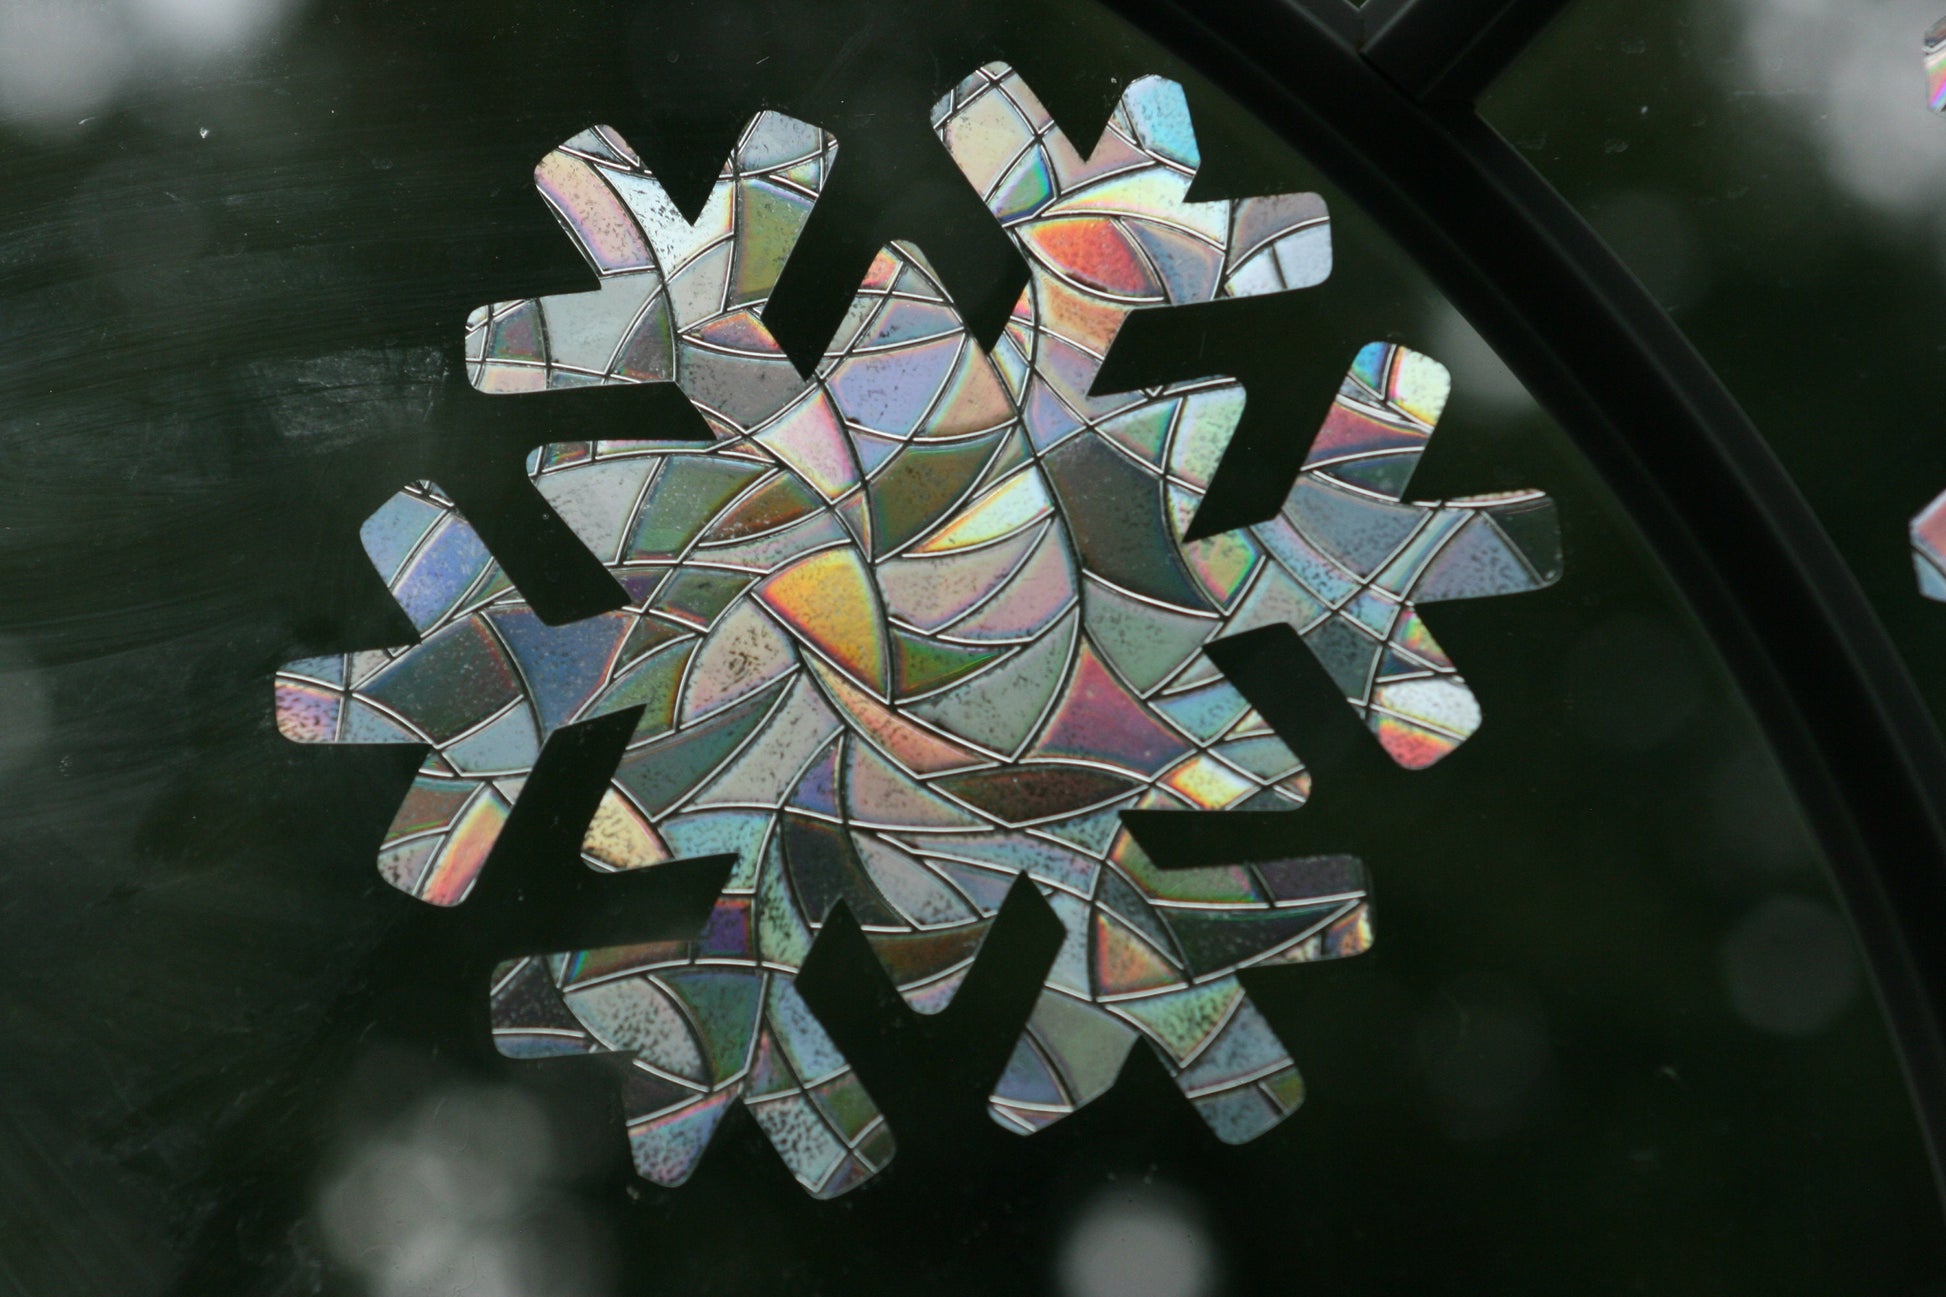 Snowflake Shaped Window Cling for Christmas / Winter. Suncatcher Rainbow Window Film Stickers